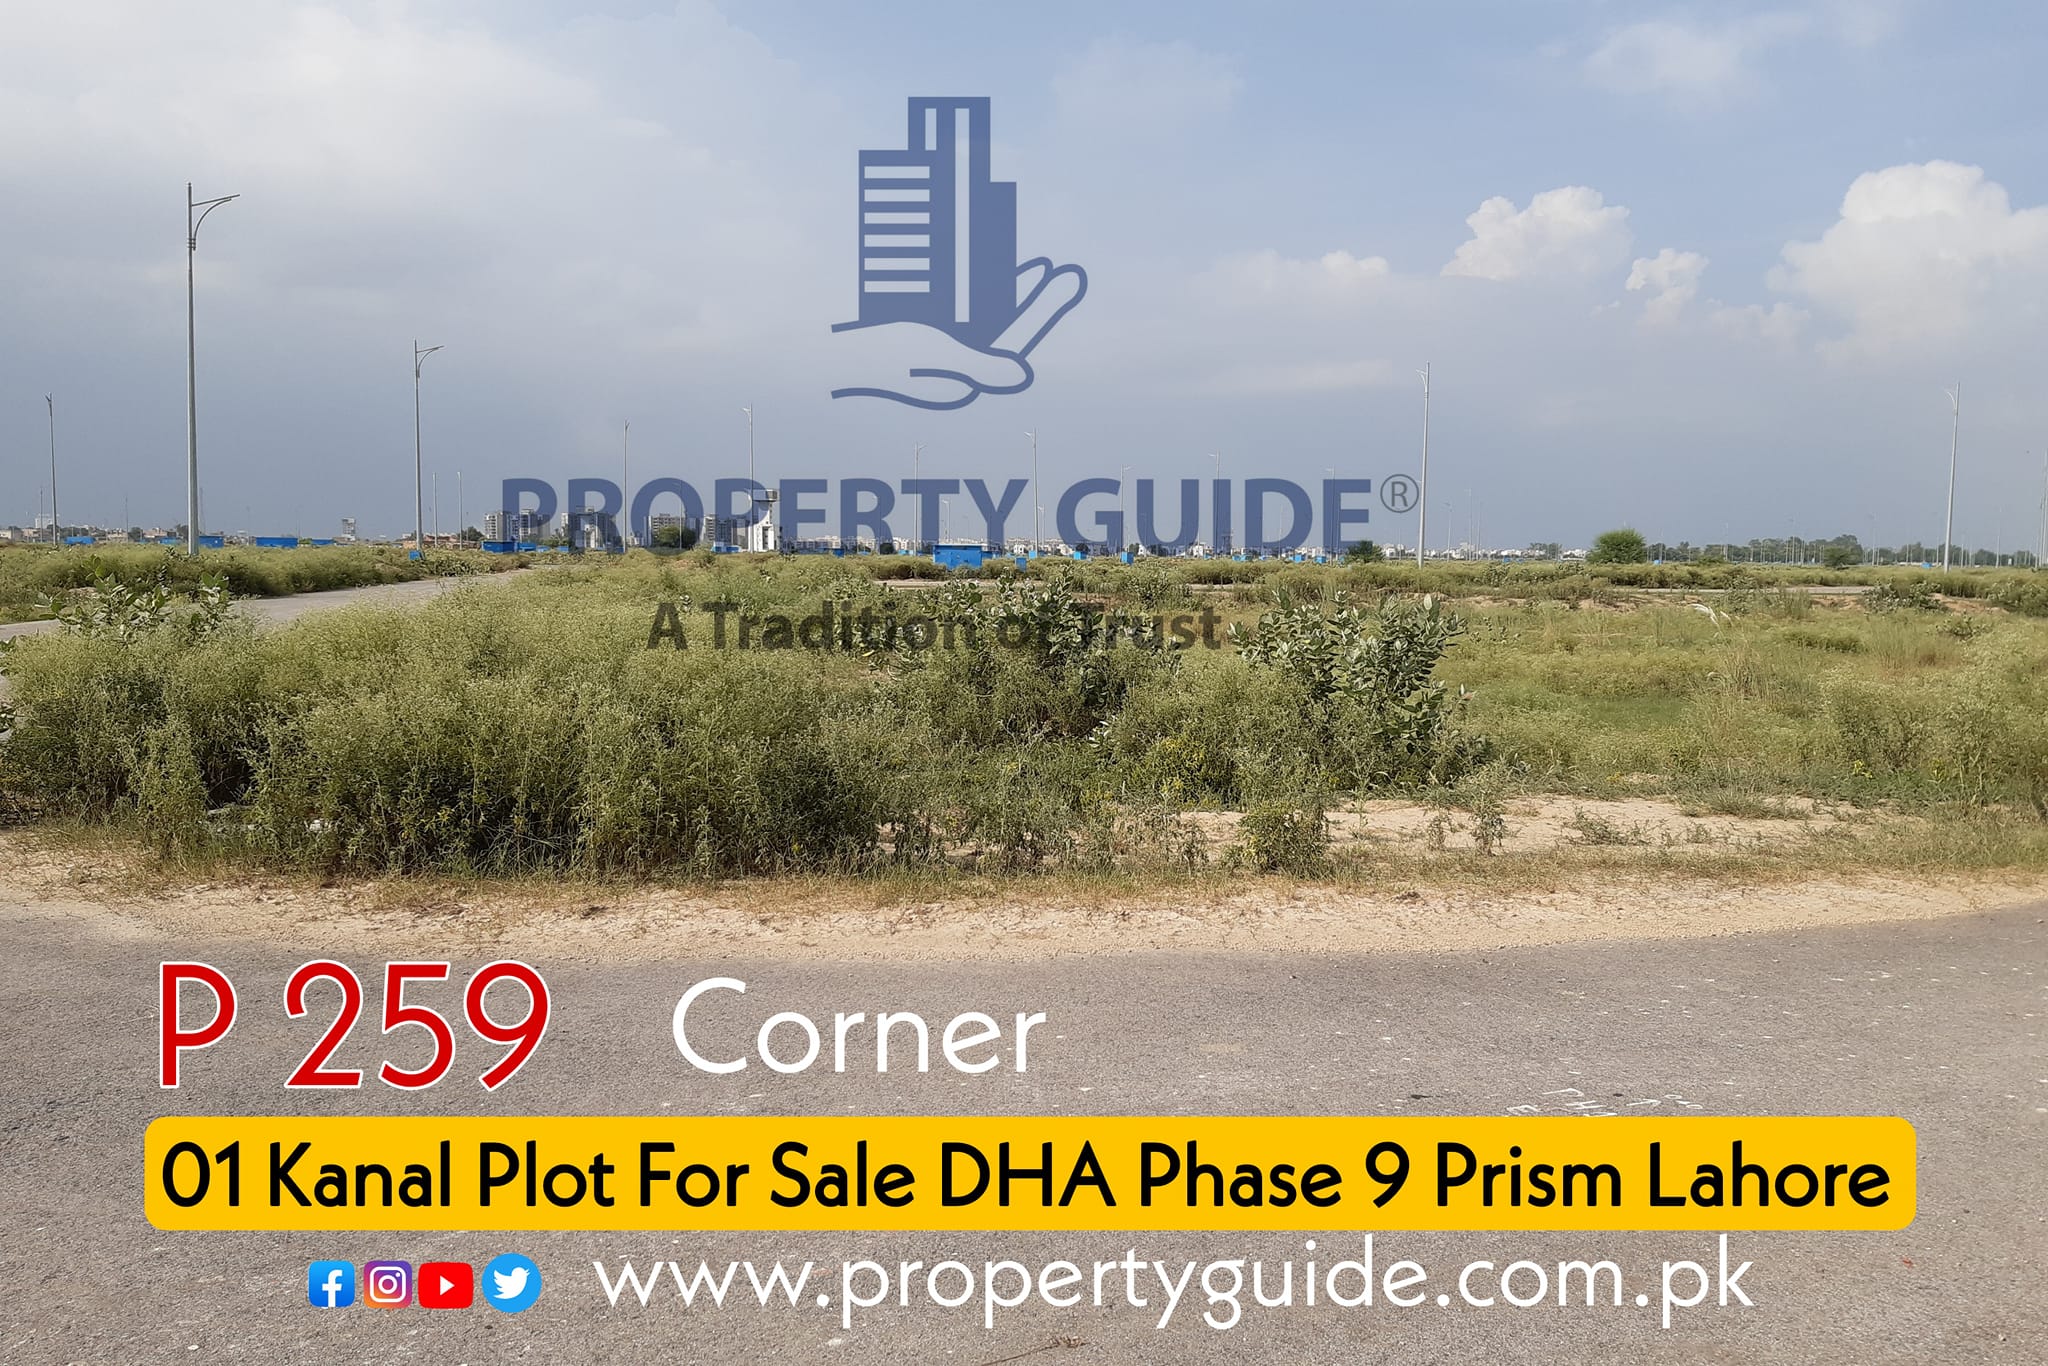 Kanal Plot For Sale DHA Lahore Prism 9 – P 259 Corner